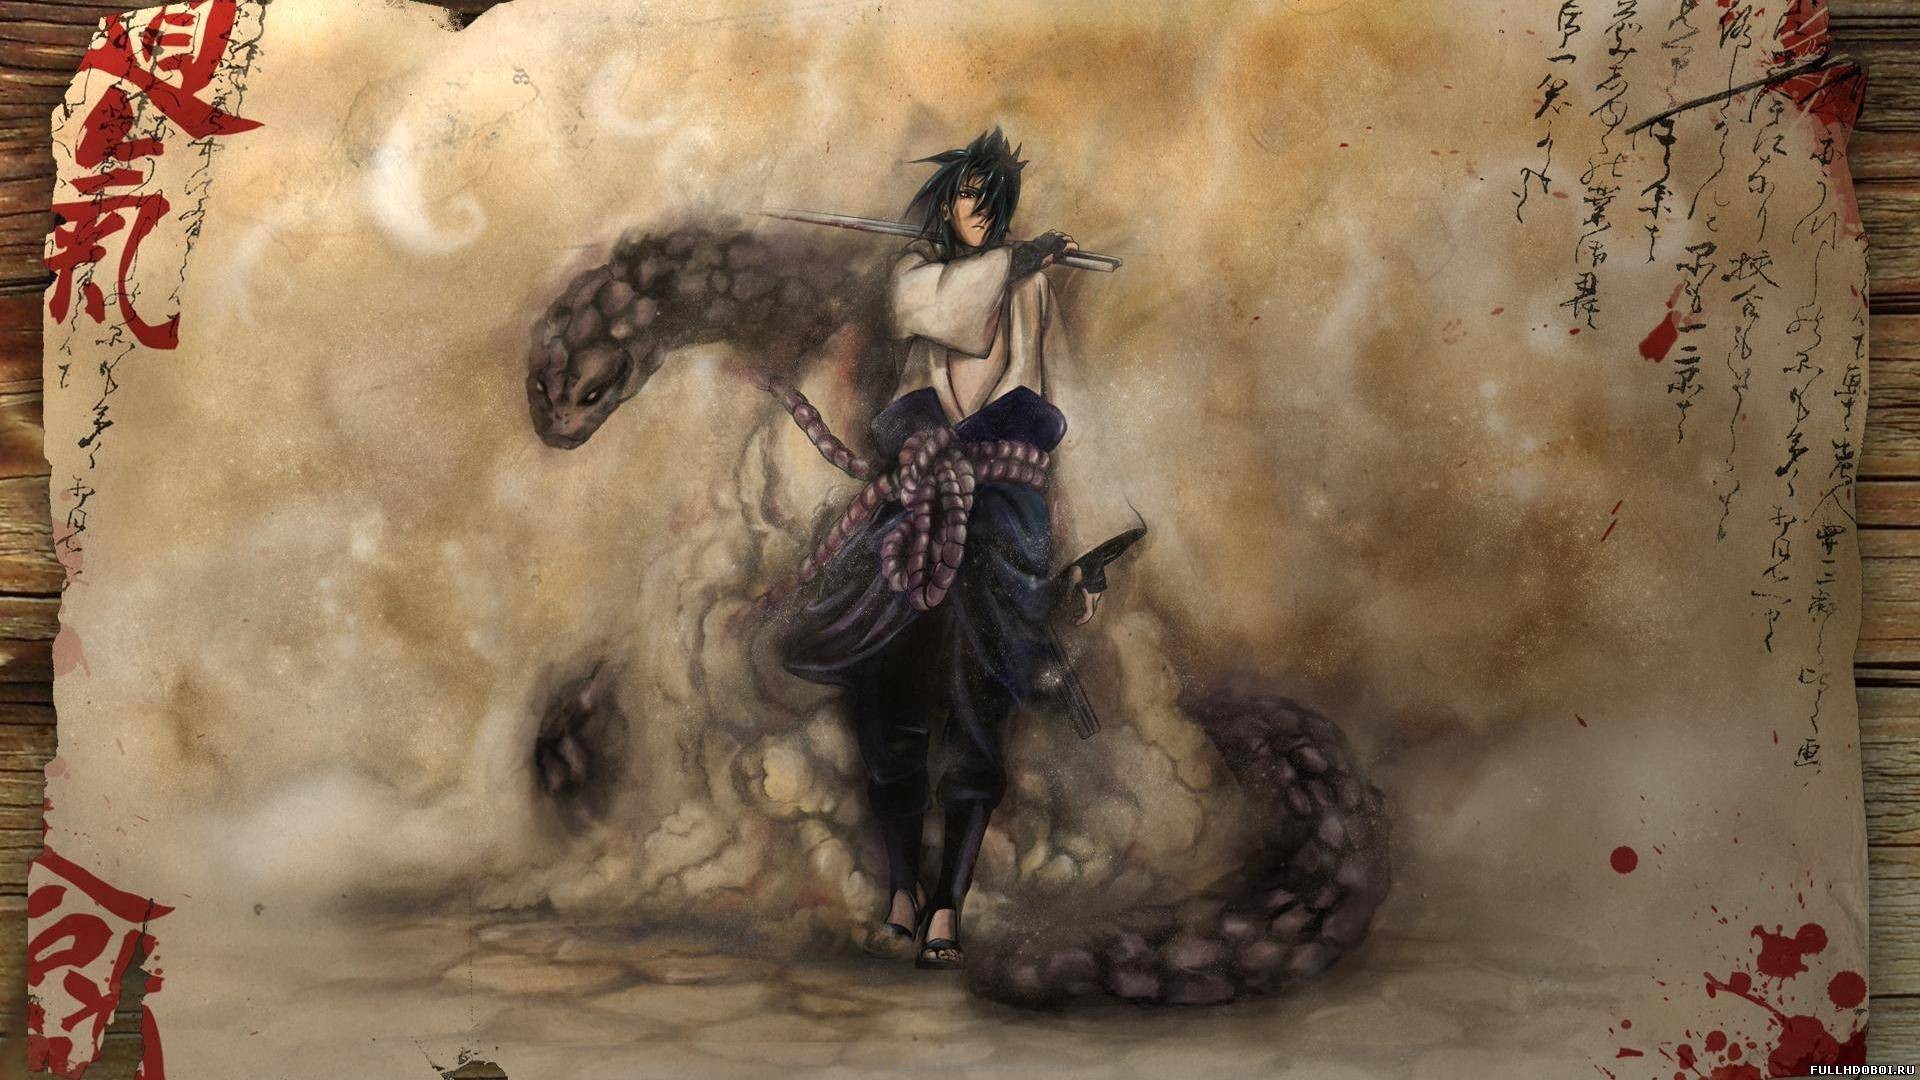 sasuke wallpaper terbaru 2013,cg artwork,illustration,art,fictional character,mythology